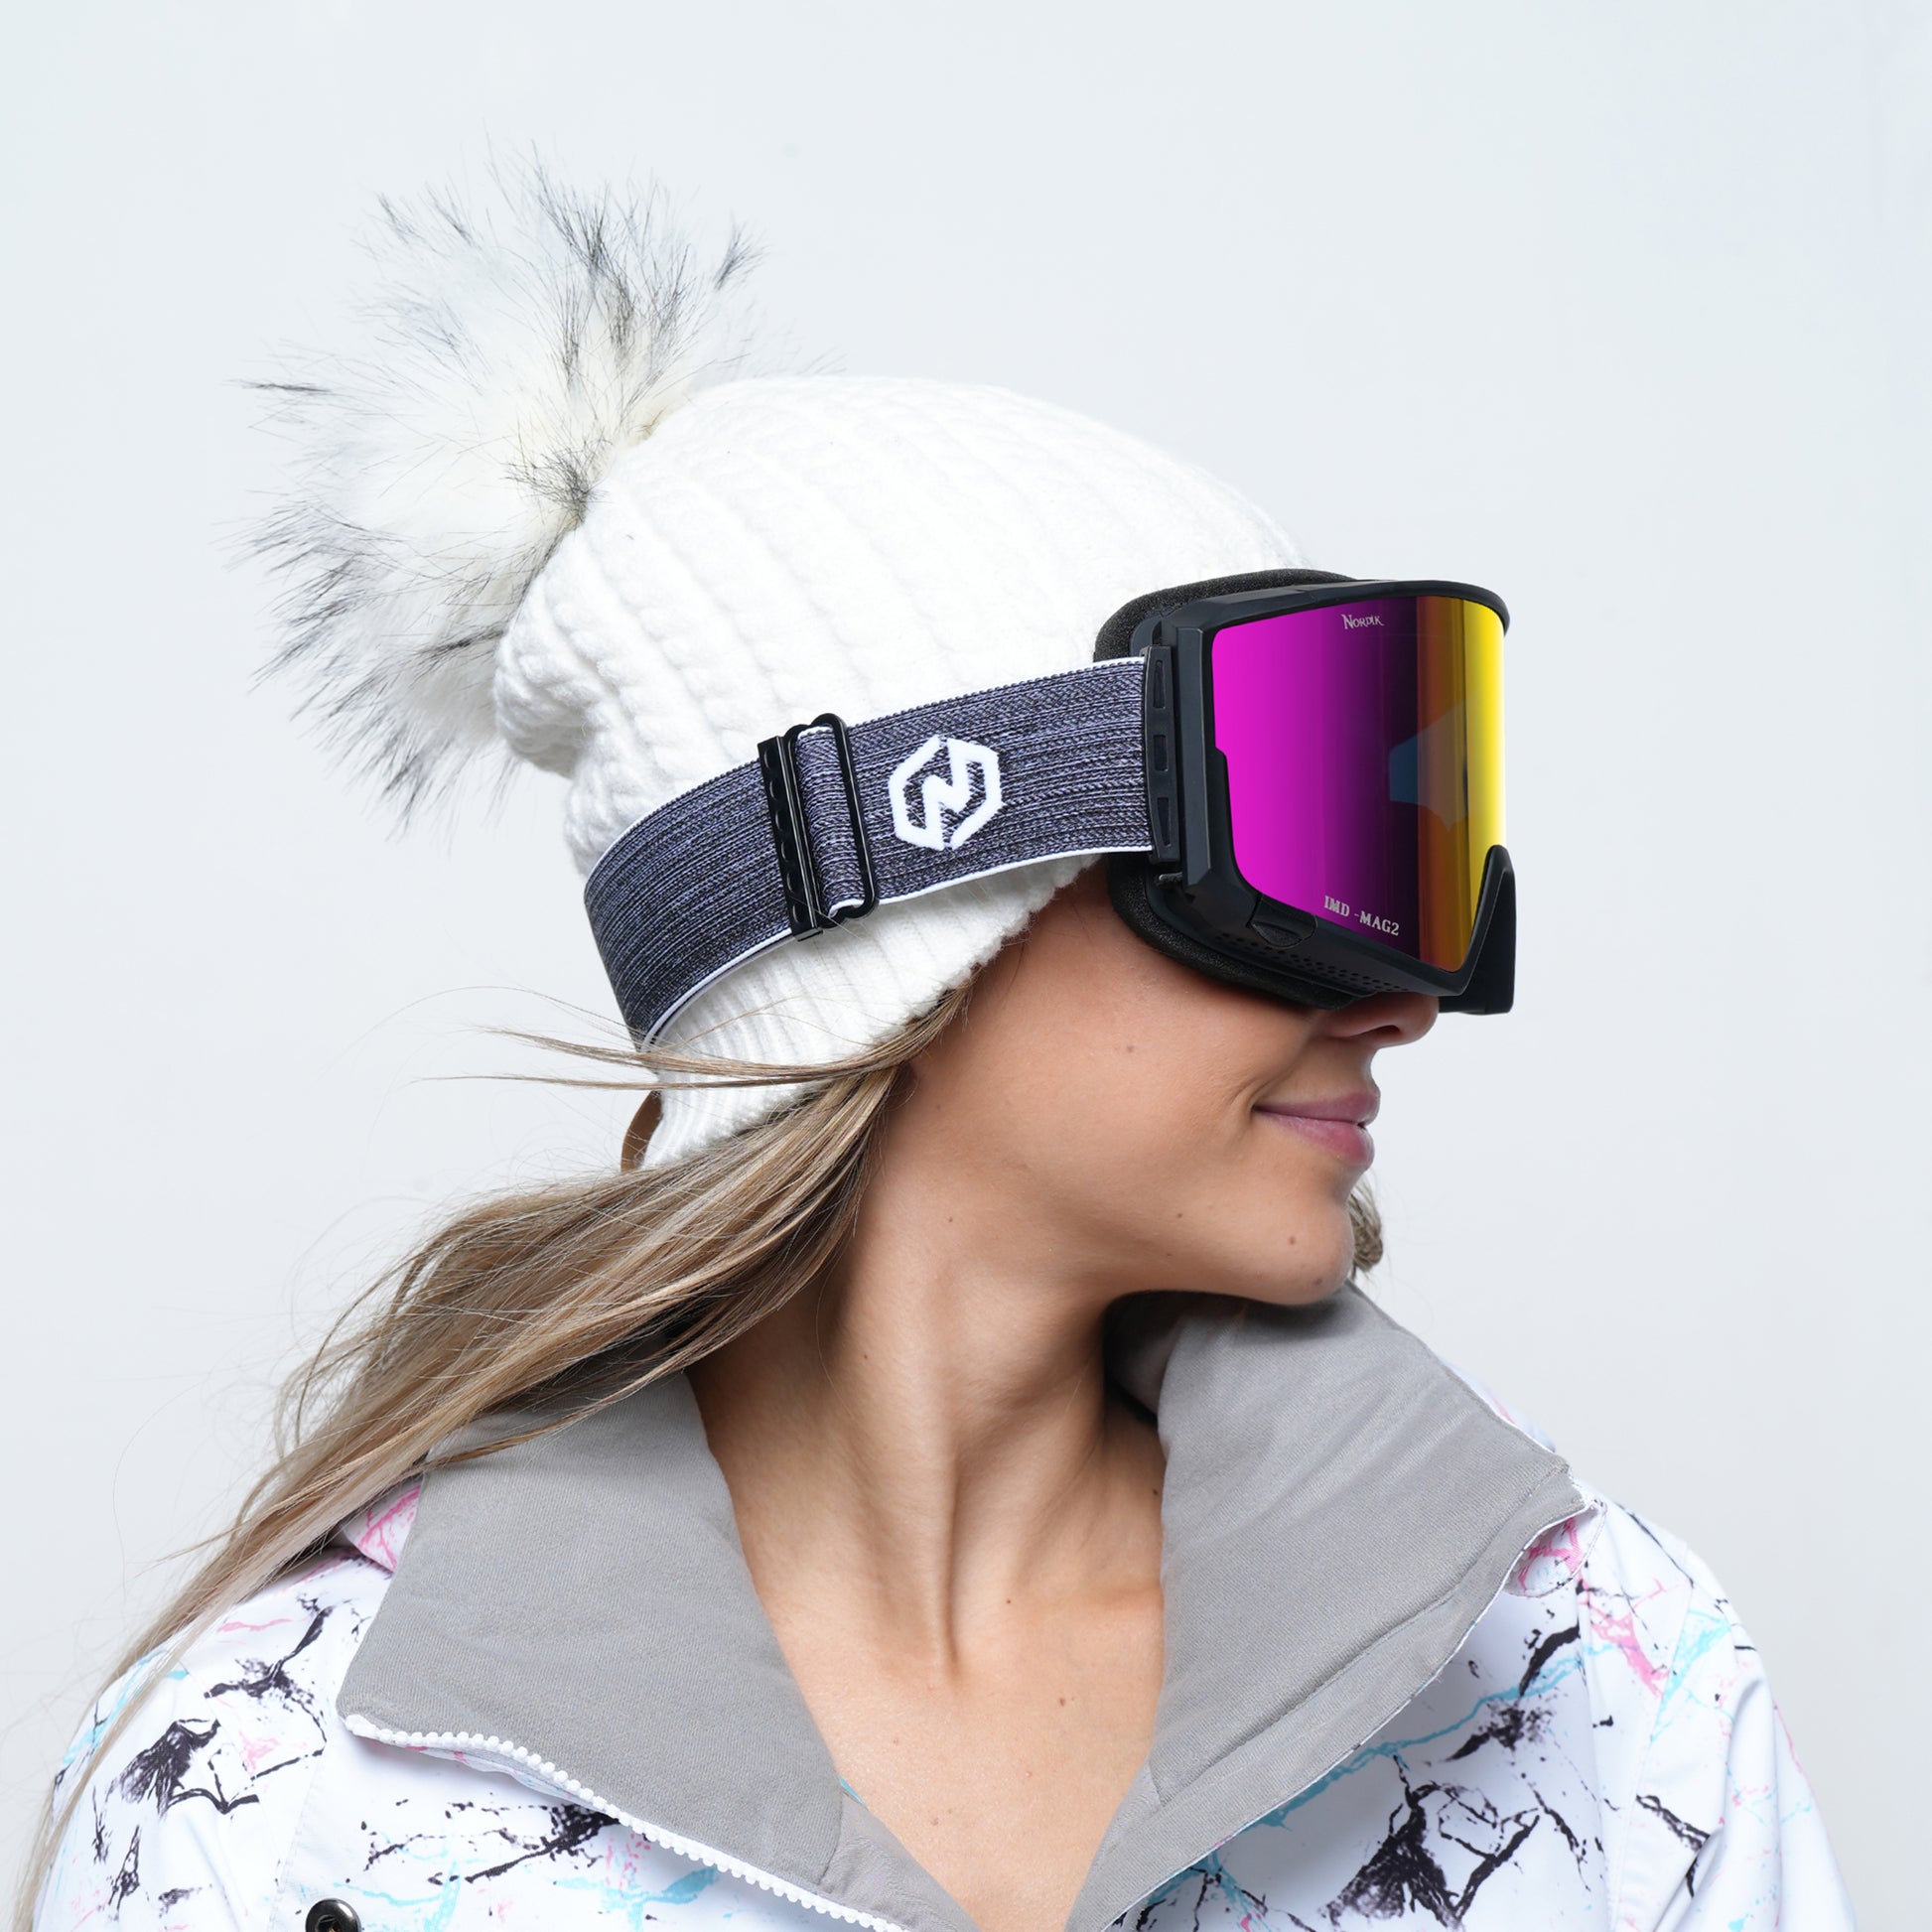 ODIN Ski Goggles